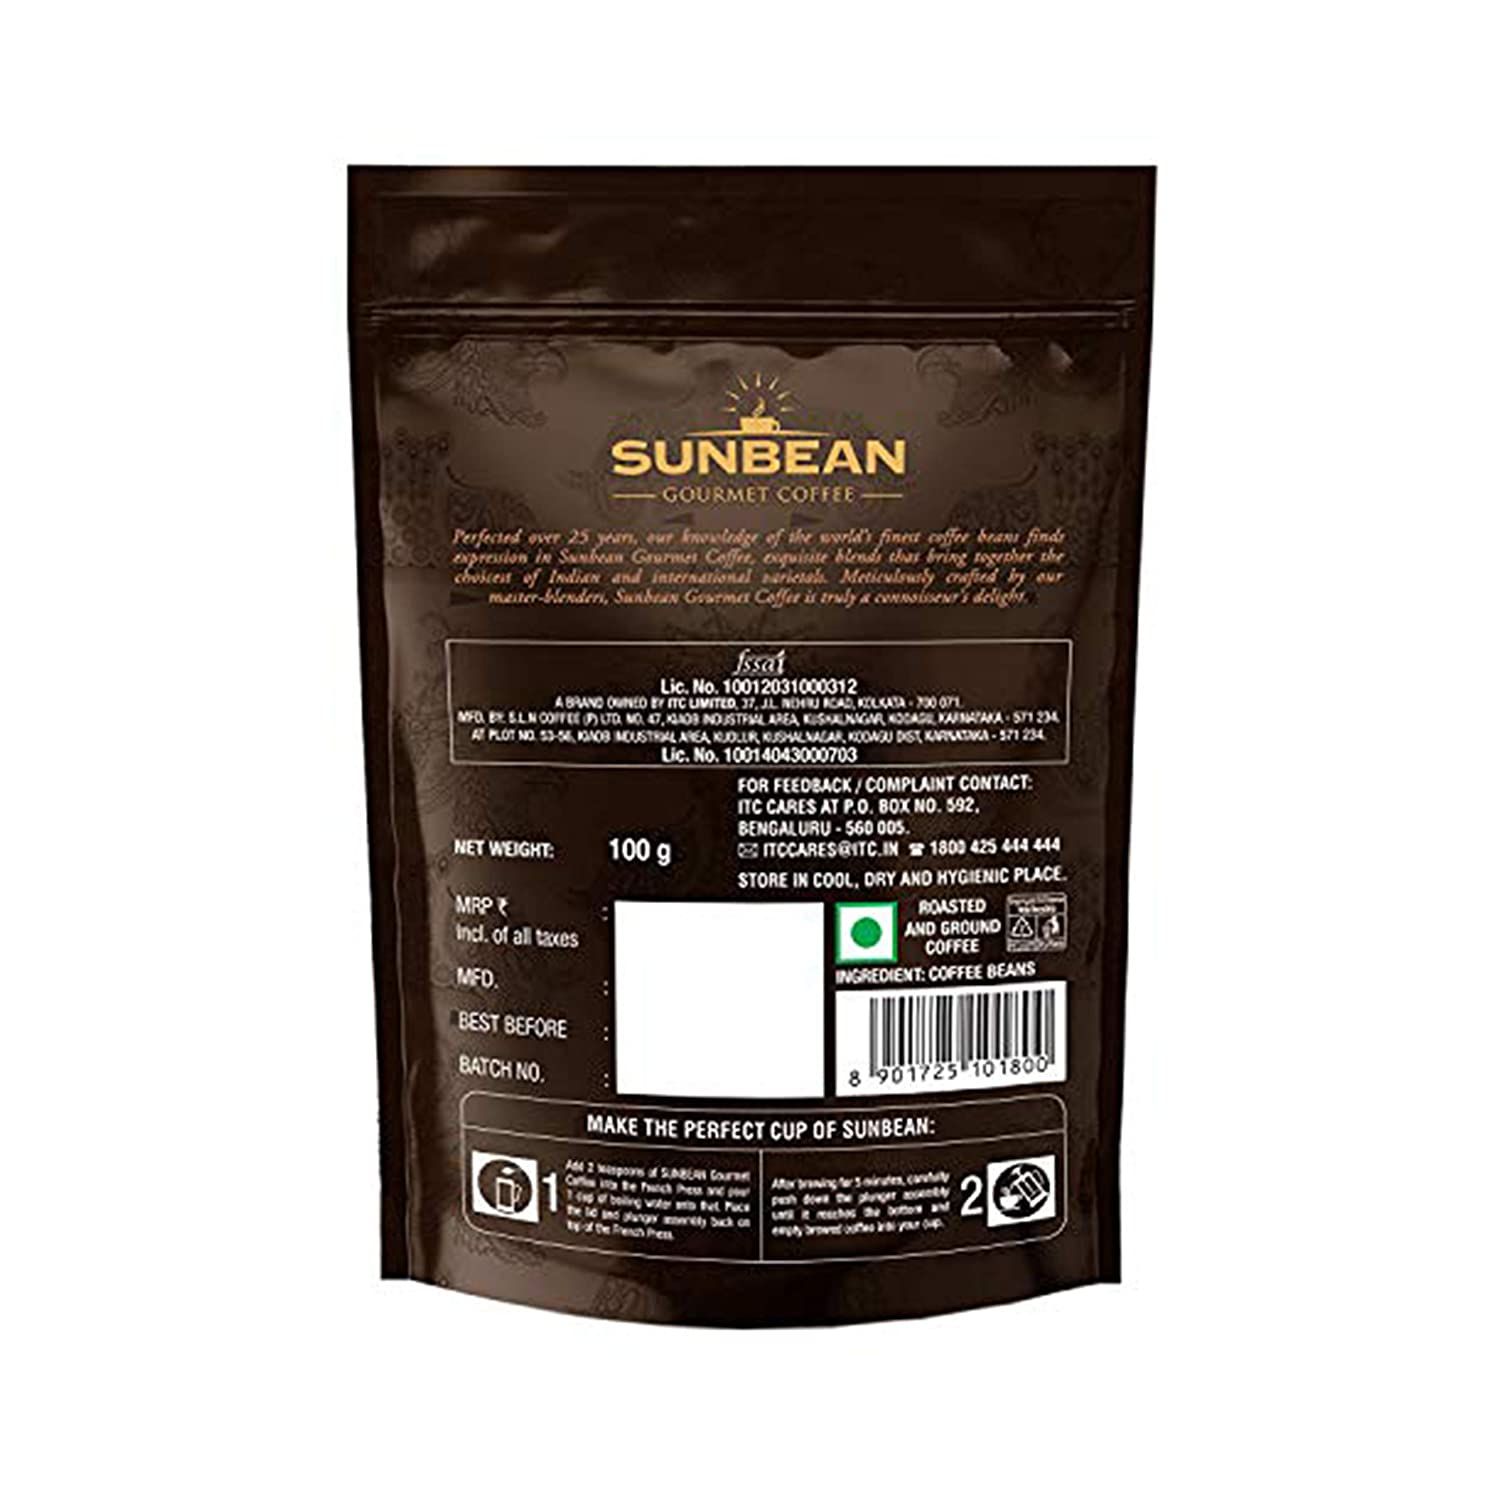 Sunbean Gourmet Coffee Panagiri Roastes & Ground Coffee Powder Image